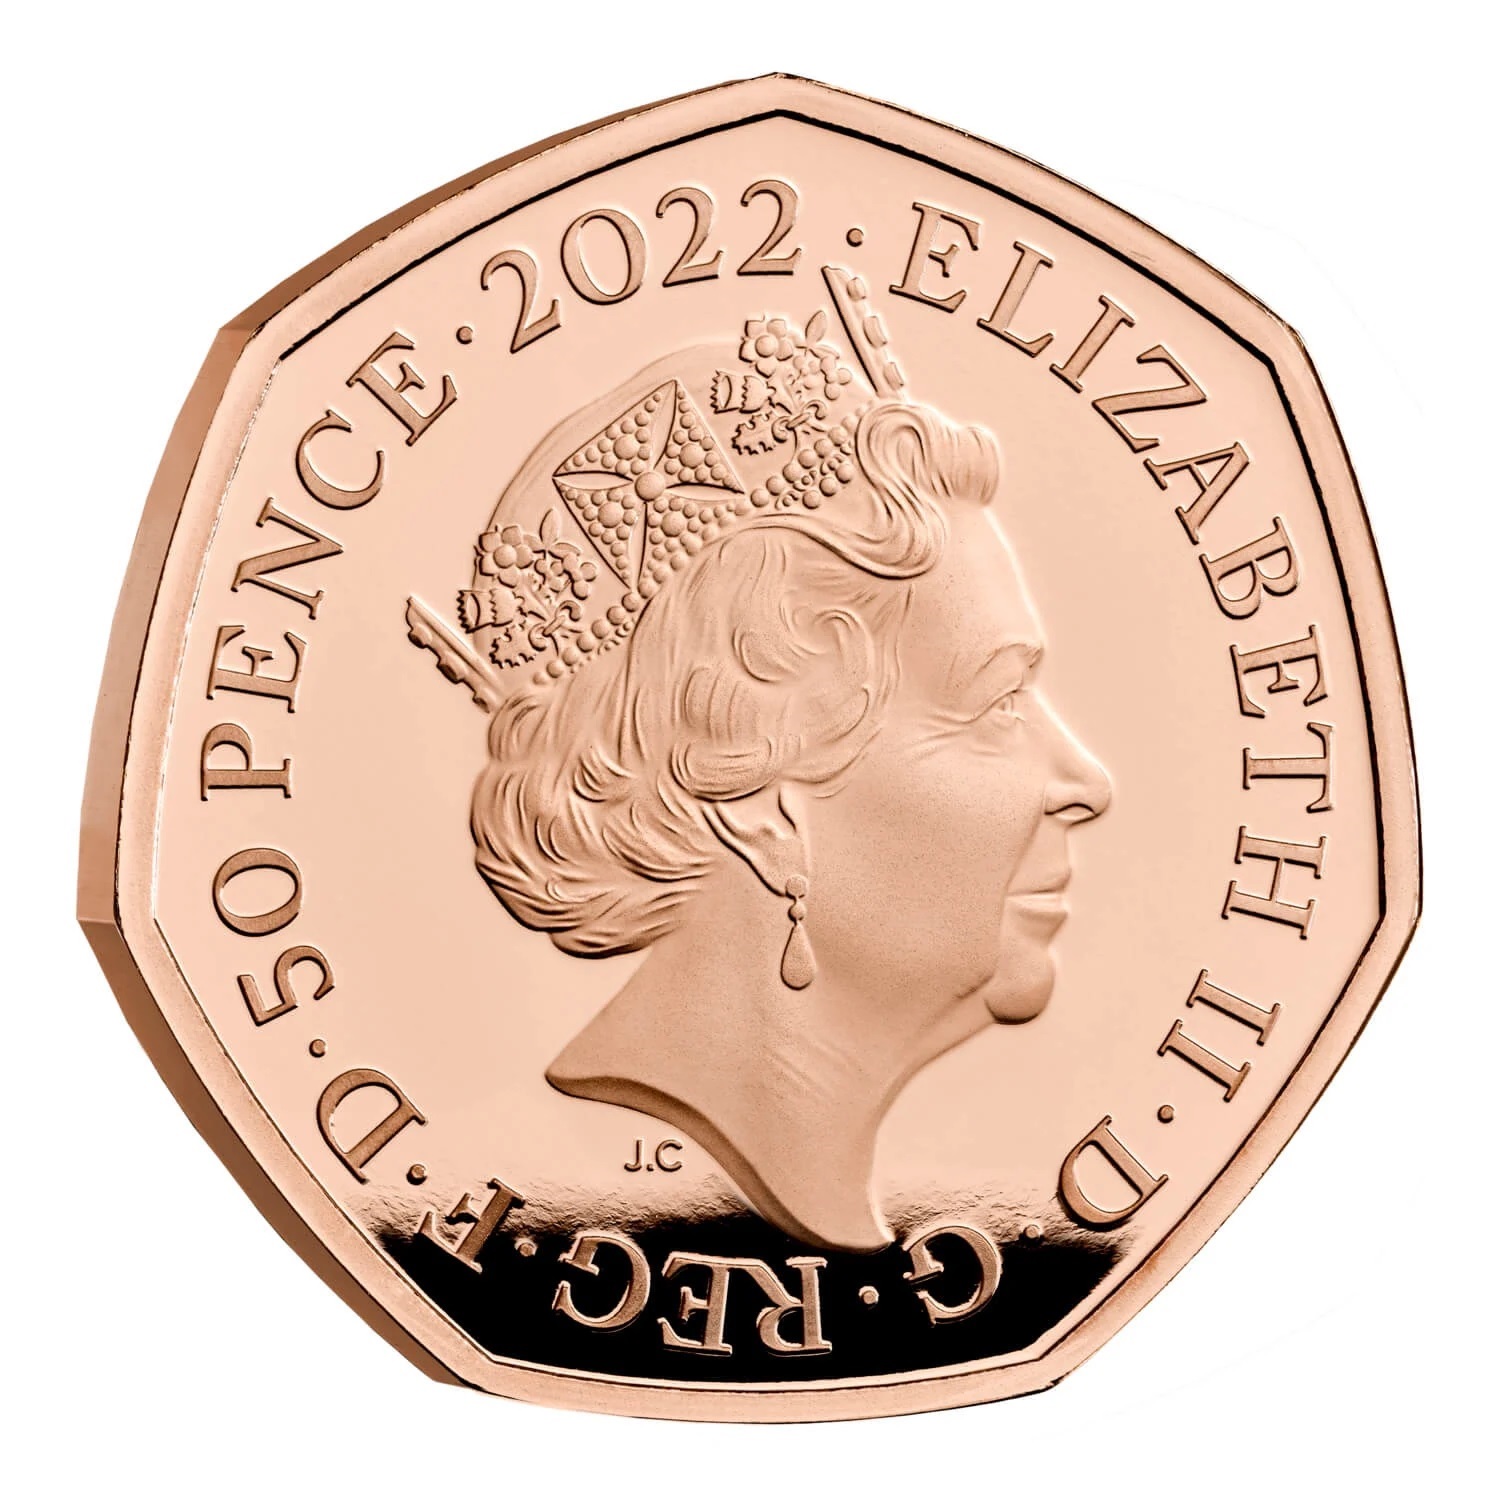 (W185.50.P.2022.UK22HPGP) United Kingdom 50 Pence Harry Potter 2022 - Proof gold Obverse (zoom)